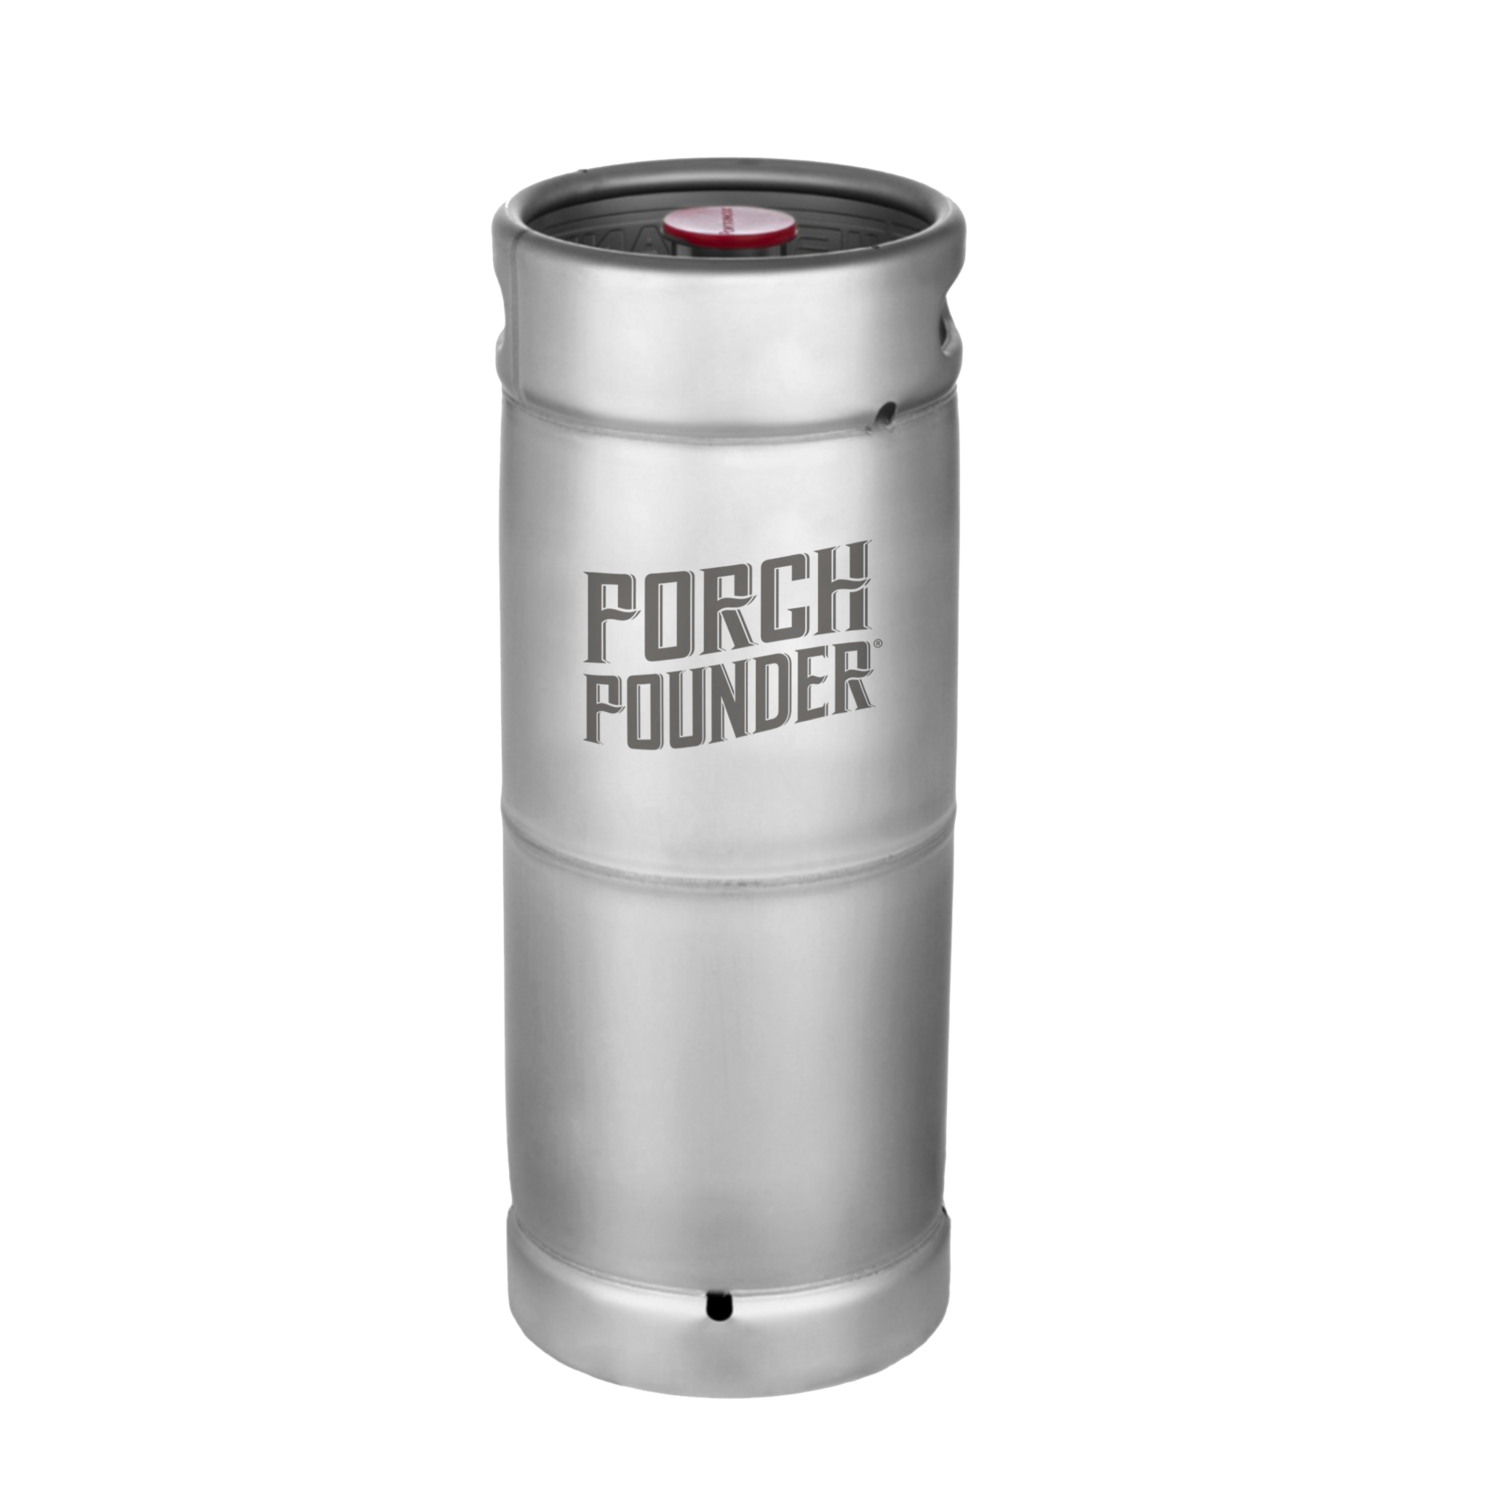 Porch Pounder Kegs